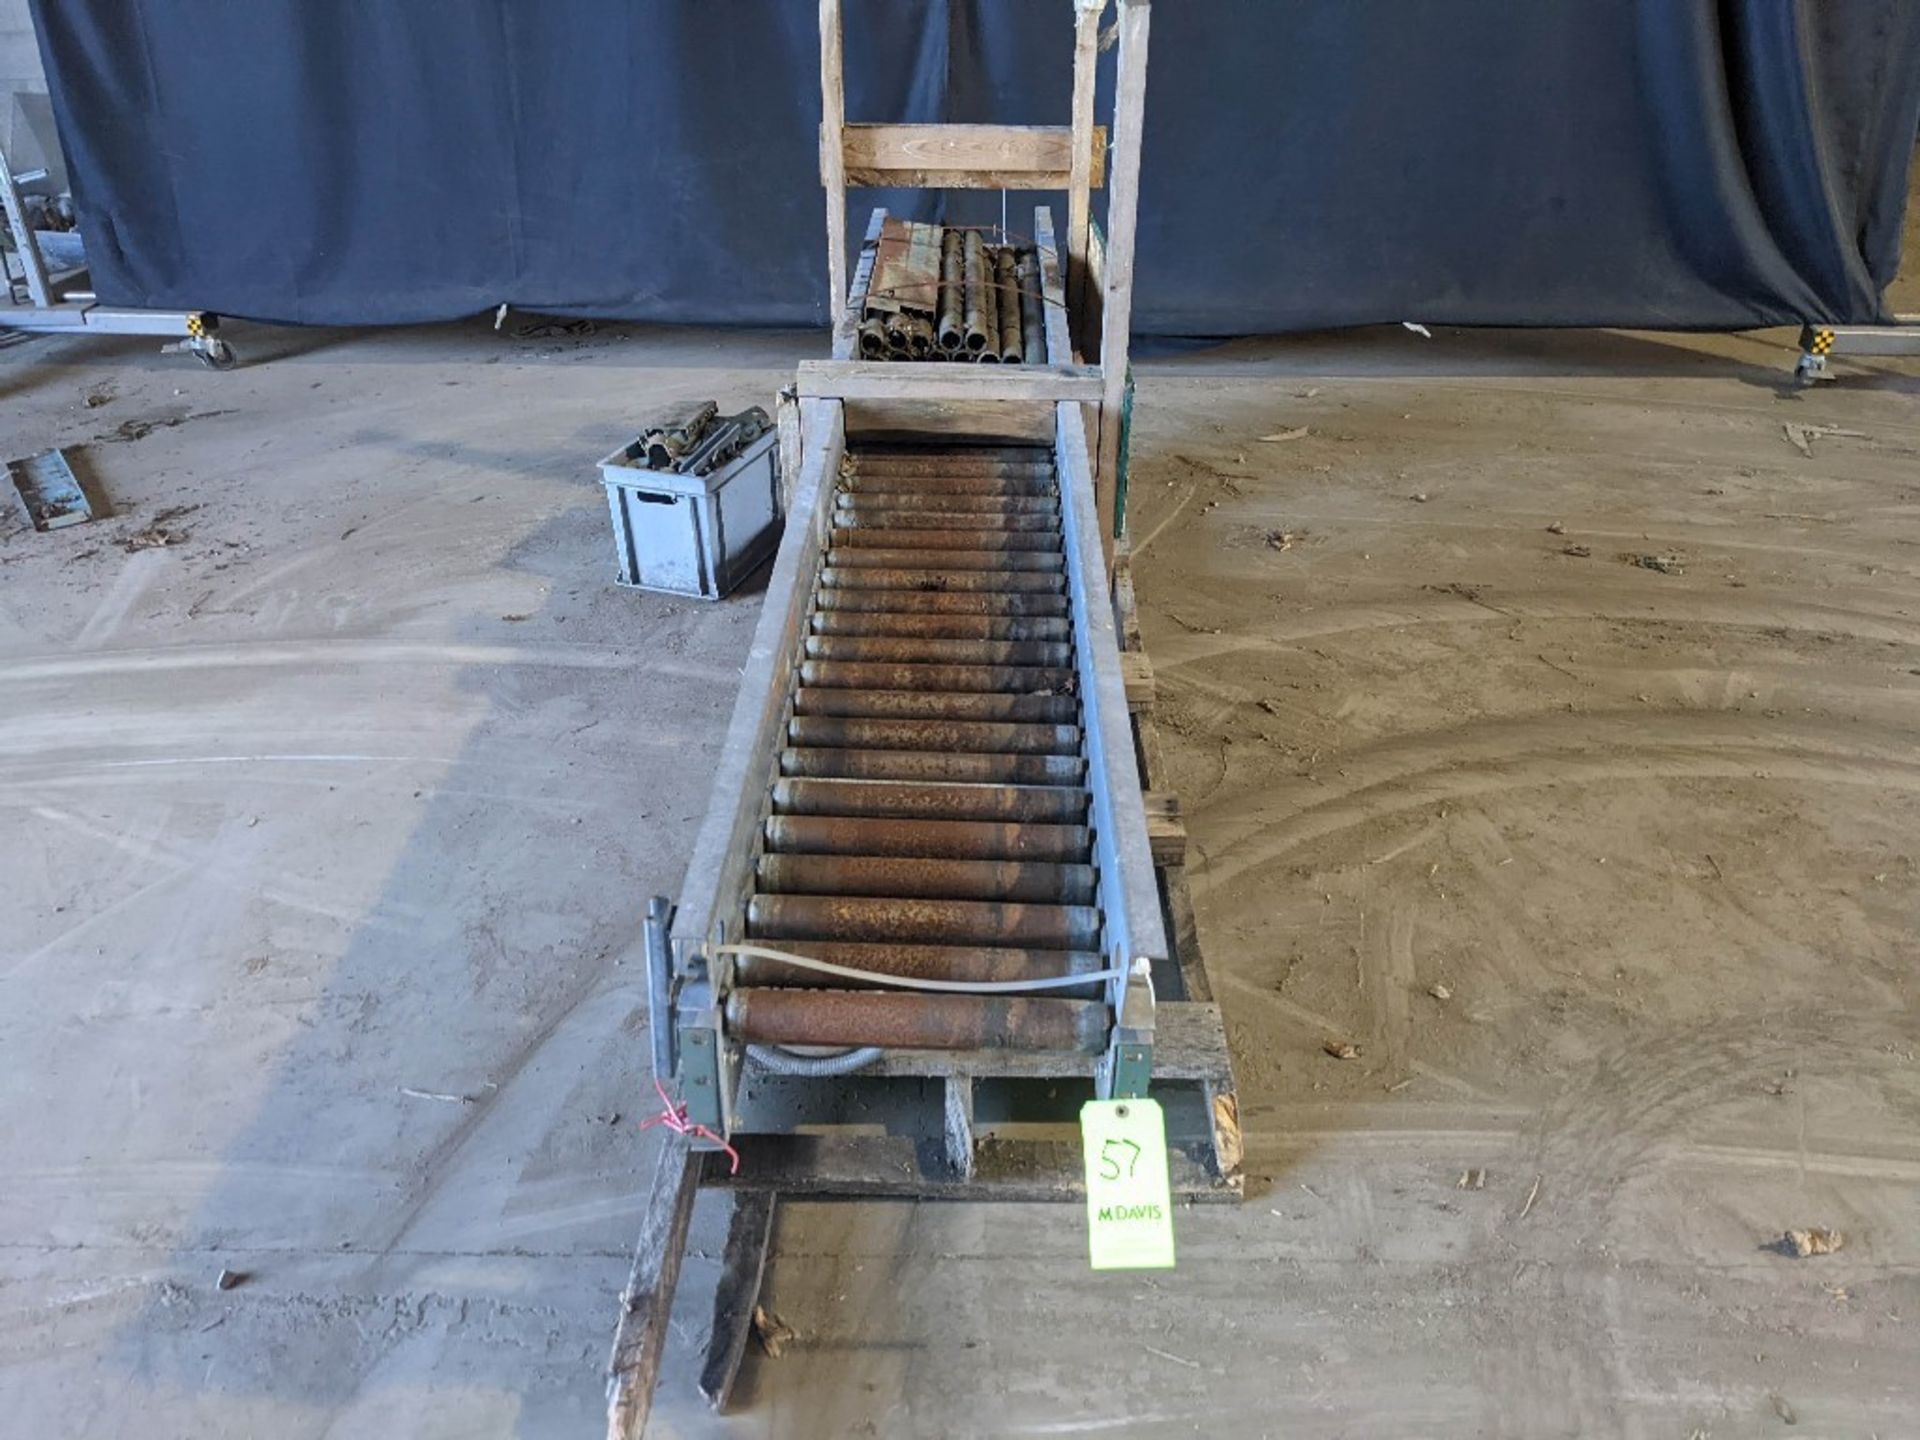 Qty (1) Hytrol Belt Over Roller Case Conveyor - Solo Drive Section - 120"L x 15"W, Model 190-ACZ,